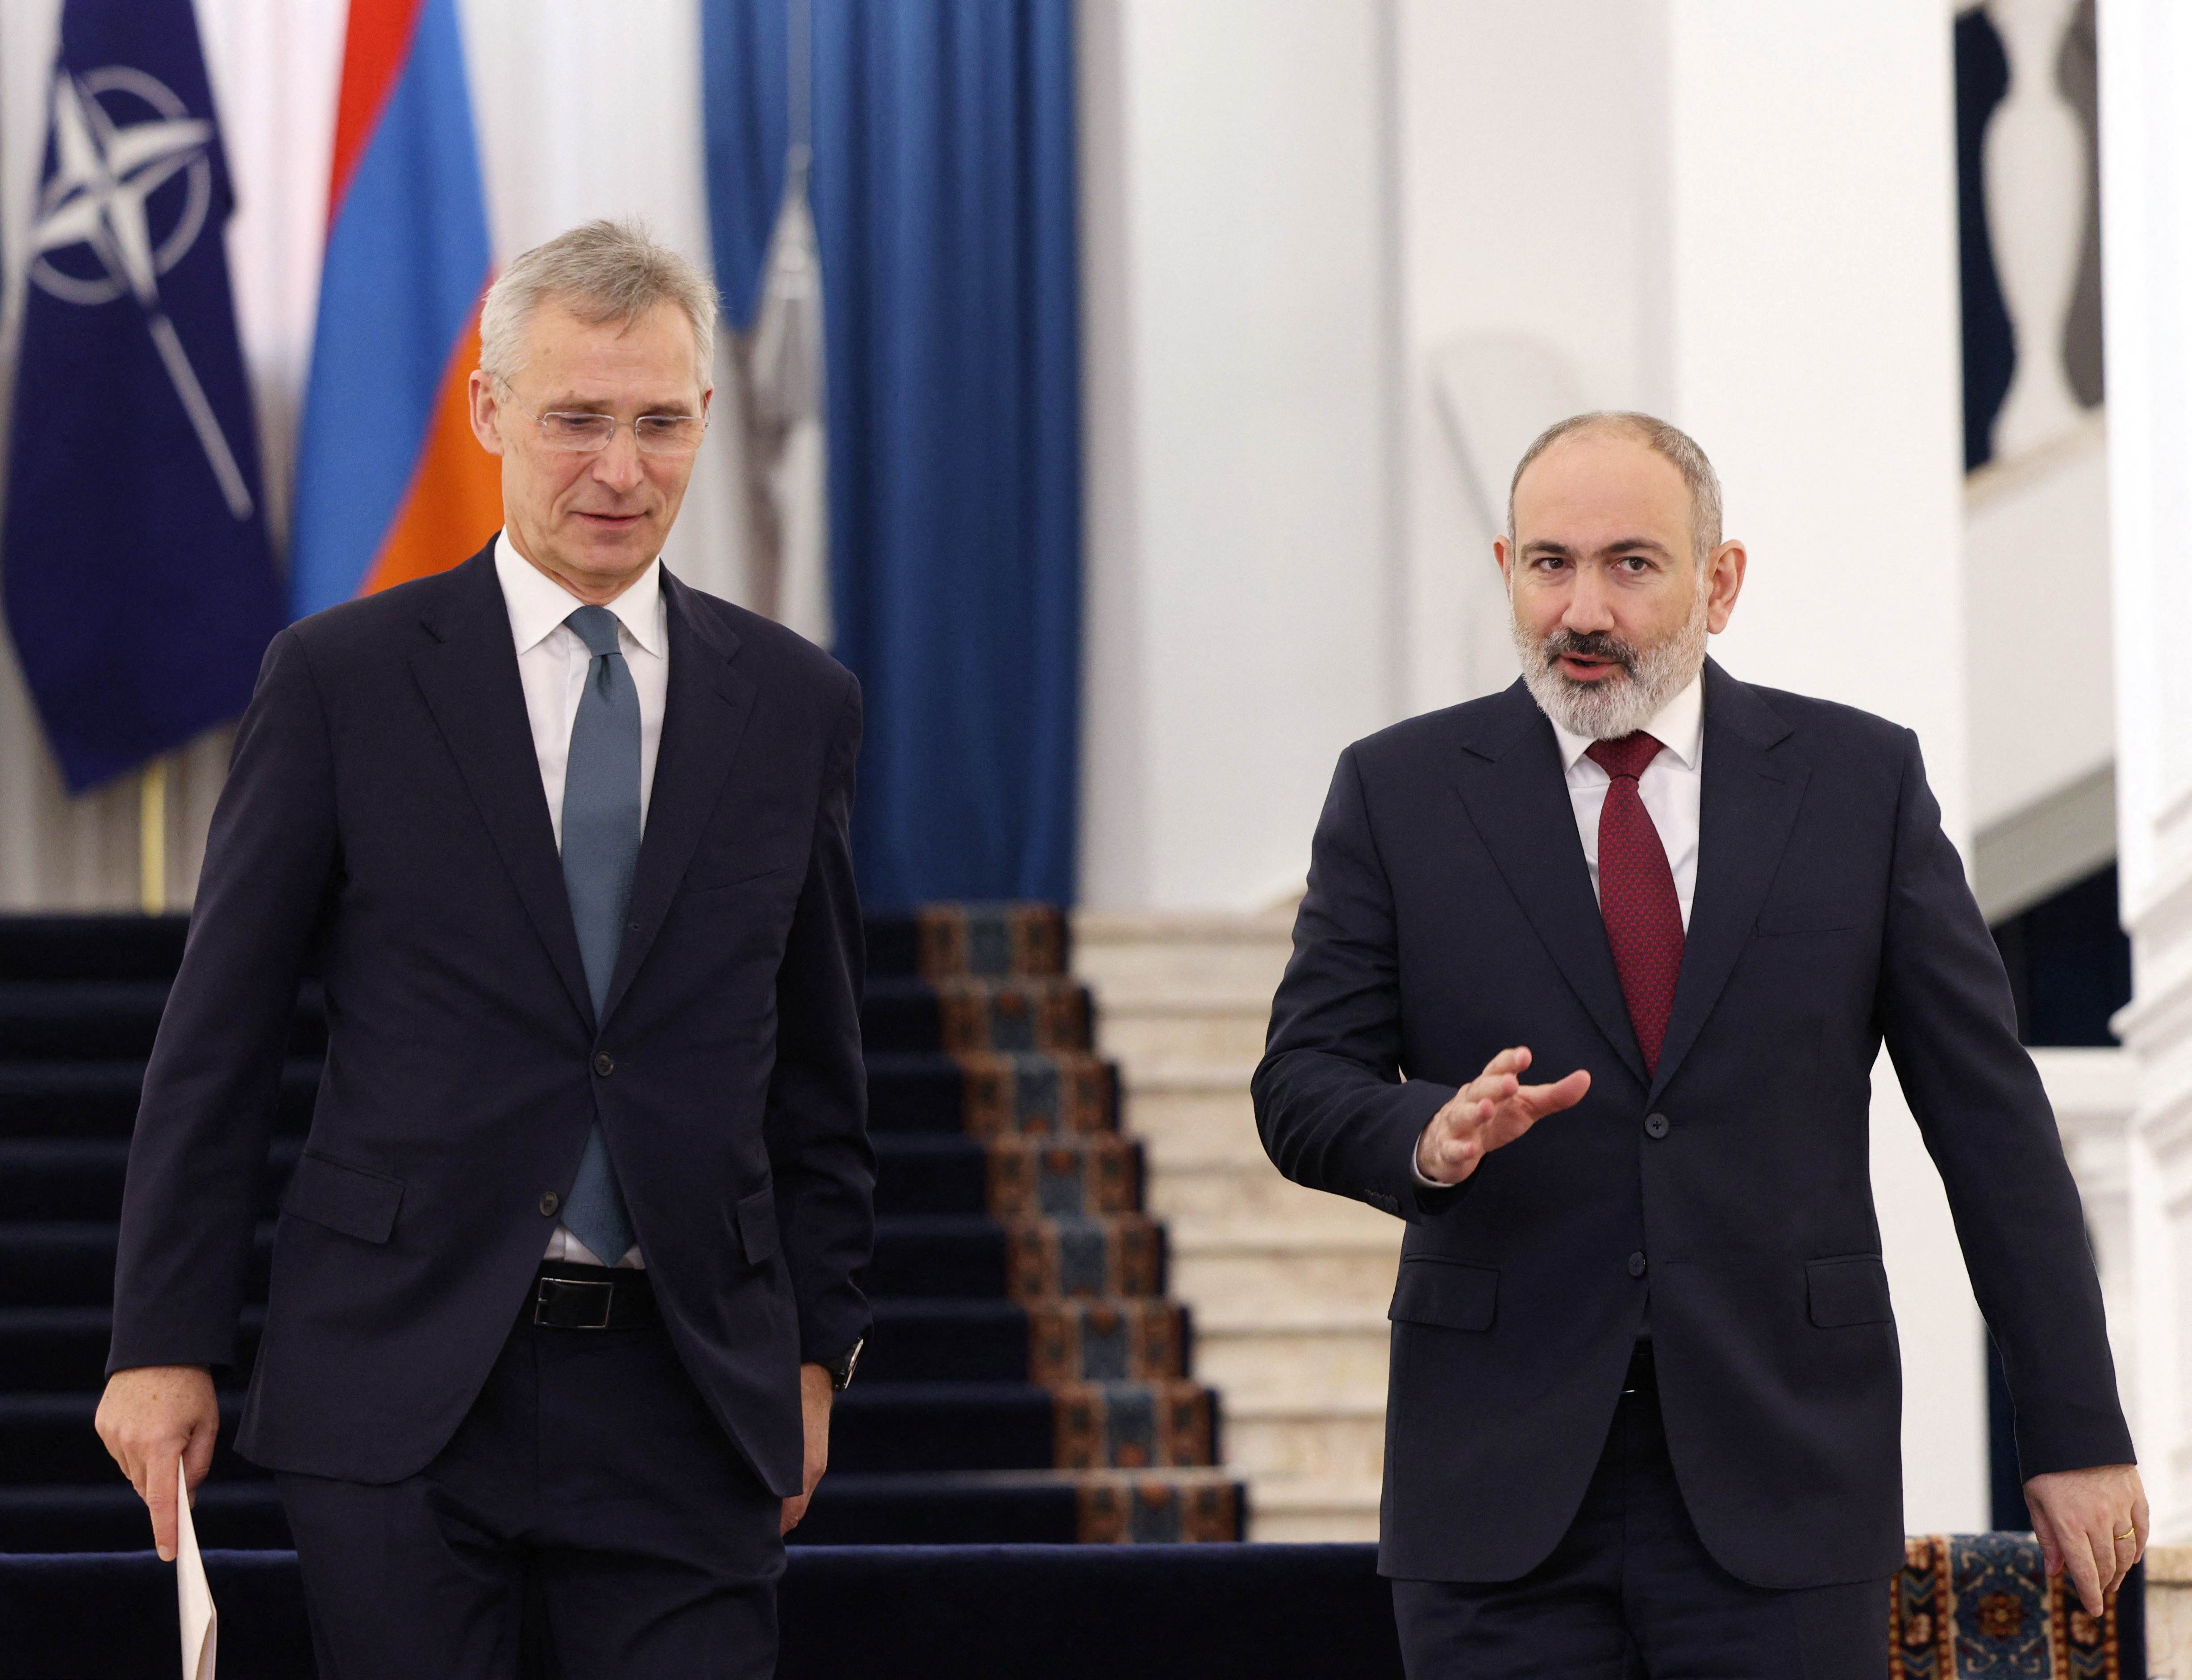 NATO Secretary General Jens Stoltenberg meets Armenian Prime Minister Nikol Pashinyan in Yerevan